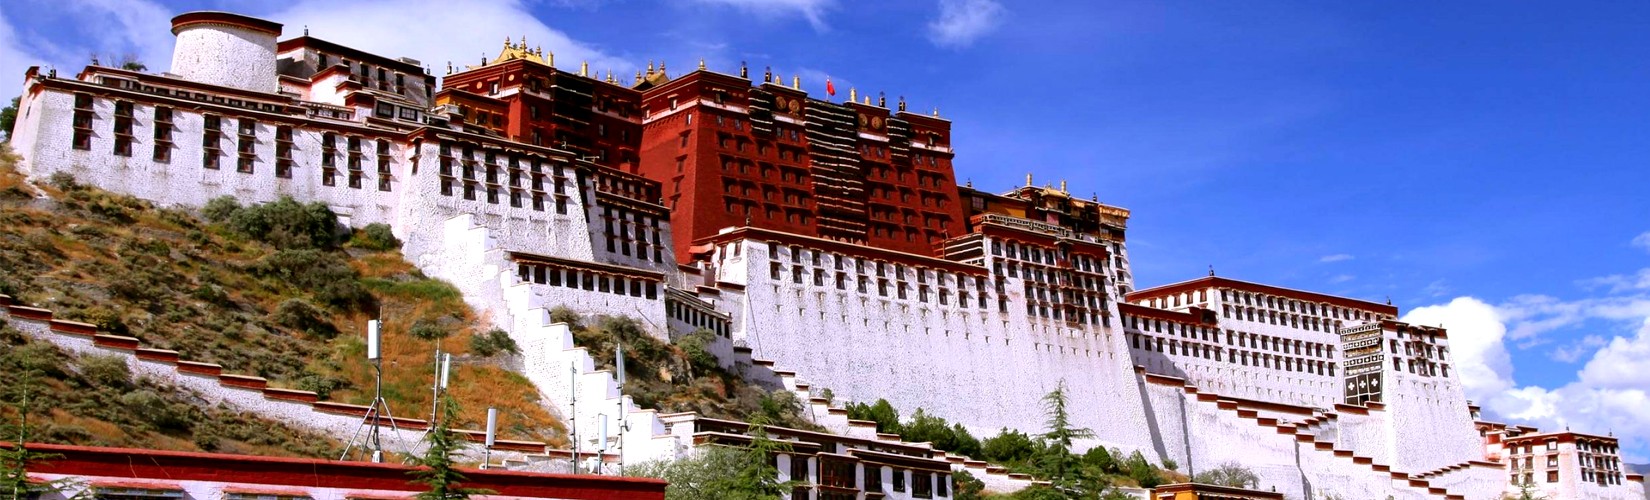 Tibet Travel Guide 